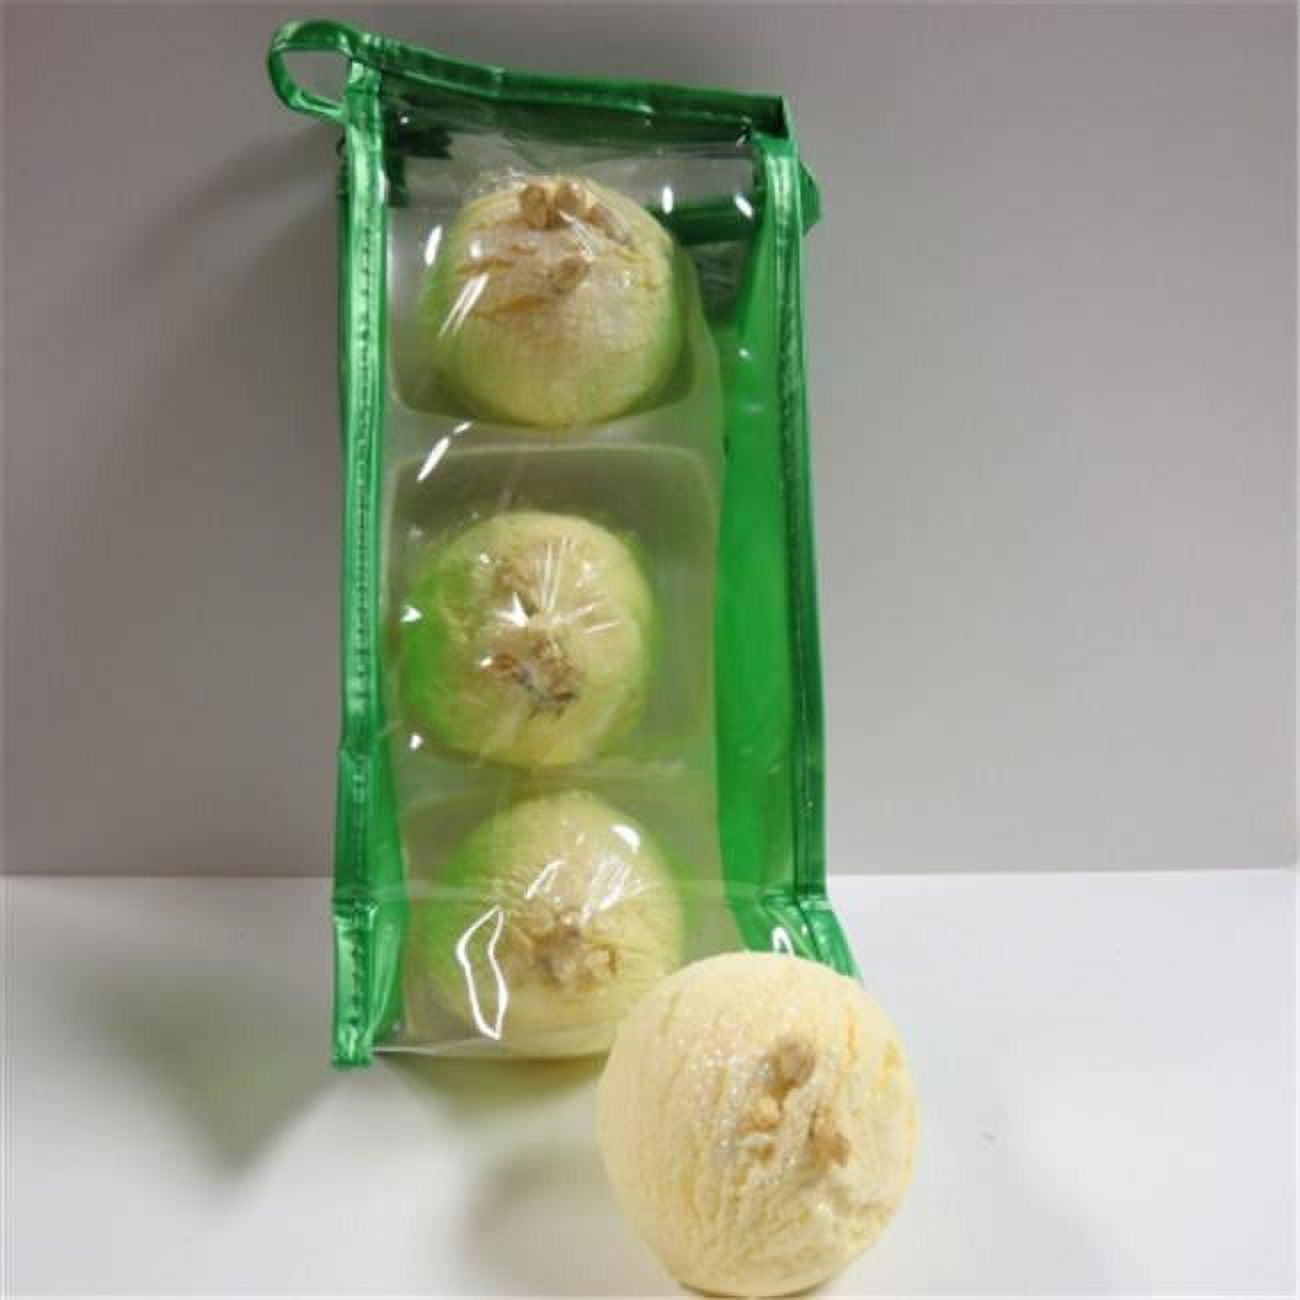 Deadsea-bbtcocl01 Coconut Lime Bubble Bath Truffles - Pack Of 3